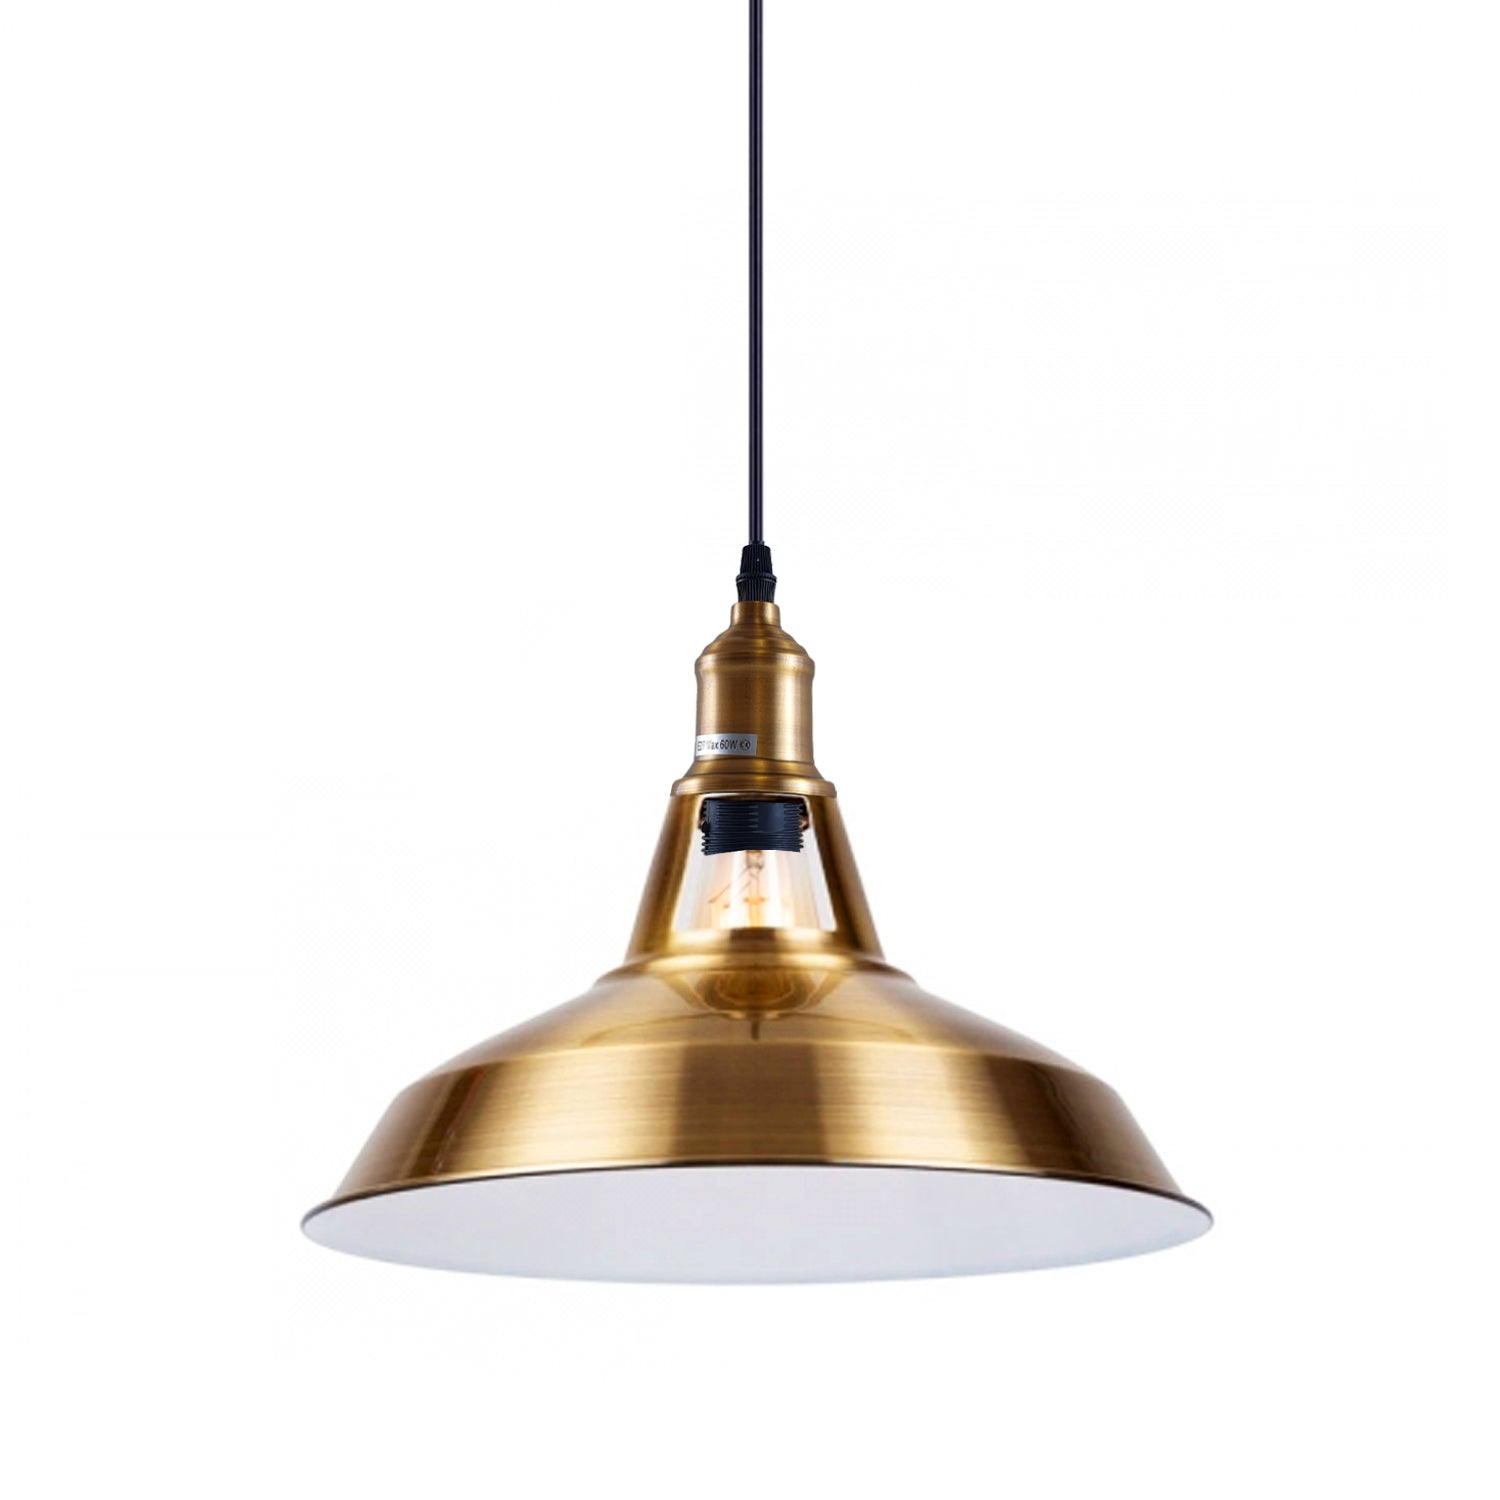 2 x Yellow Brass Metal Ceiling Lamp Shade Pendant Light~1476 - LEDSone UK Ltd